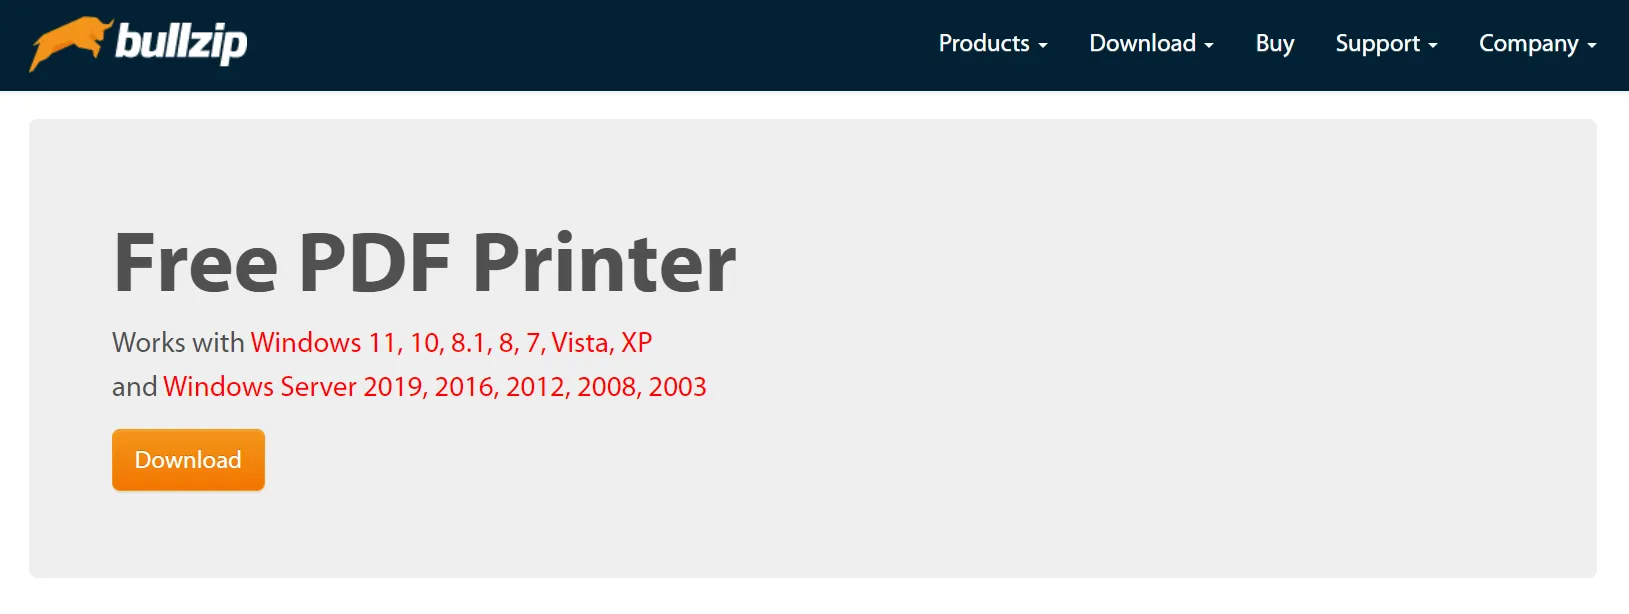 free pdf printer for windows 7 bullzip